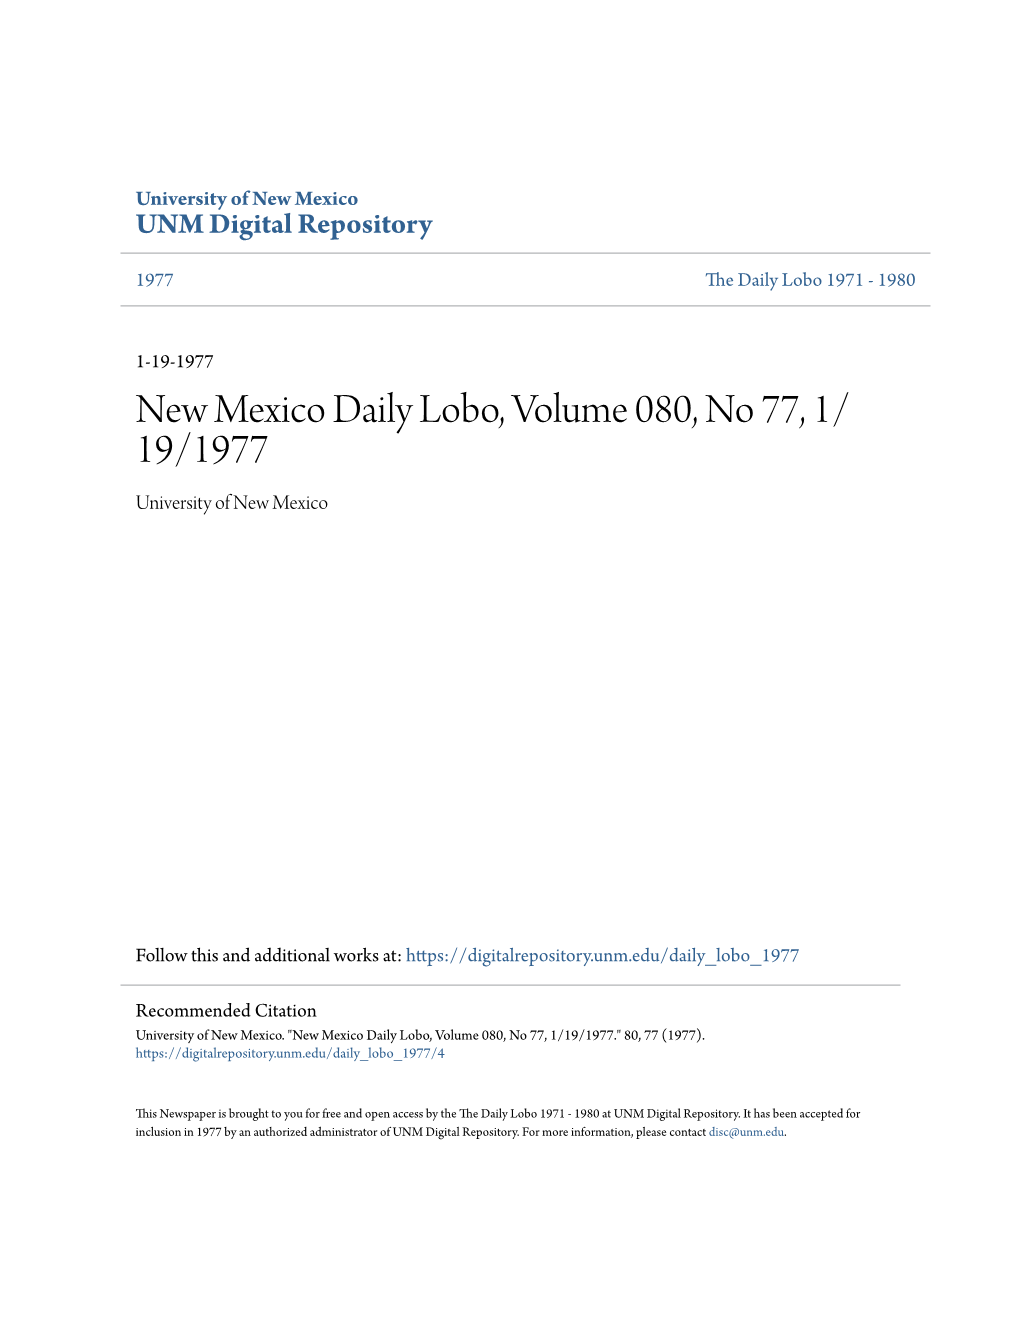 New Mexico Daily Lobo, Volume 080, No 77, 1/19/1977." 80, 77 (1977)